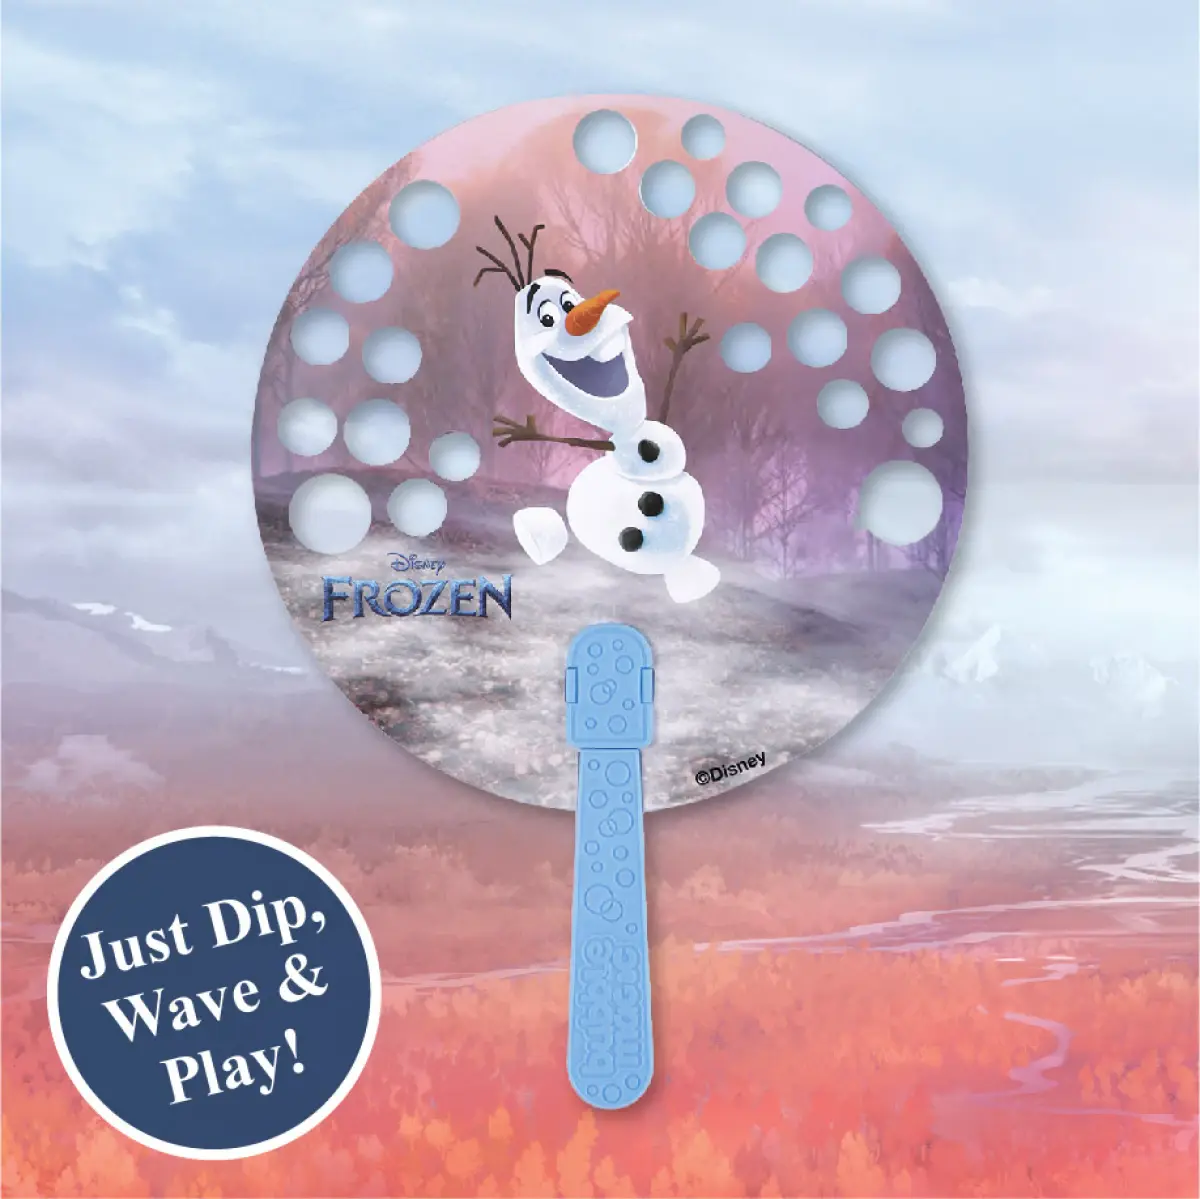 Bubble Magic Fan Bubs Olaf Frozen Theme Bubble Solution For Kids of Age 3Y+, Multicolour